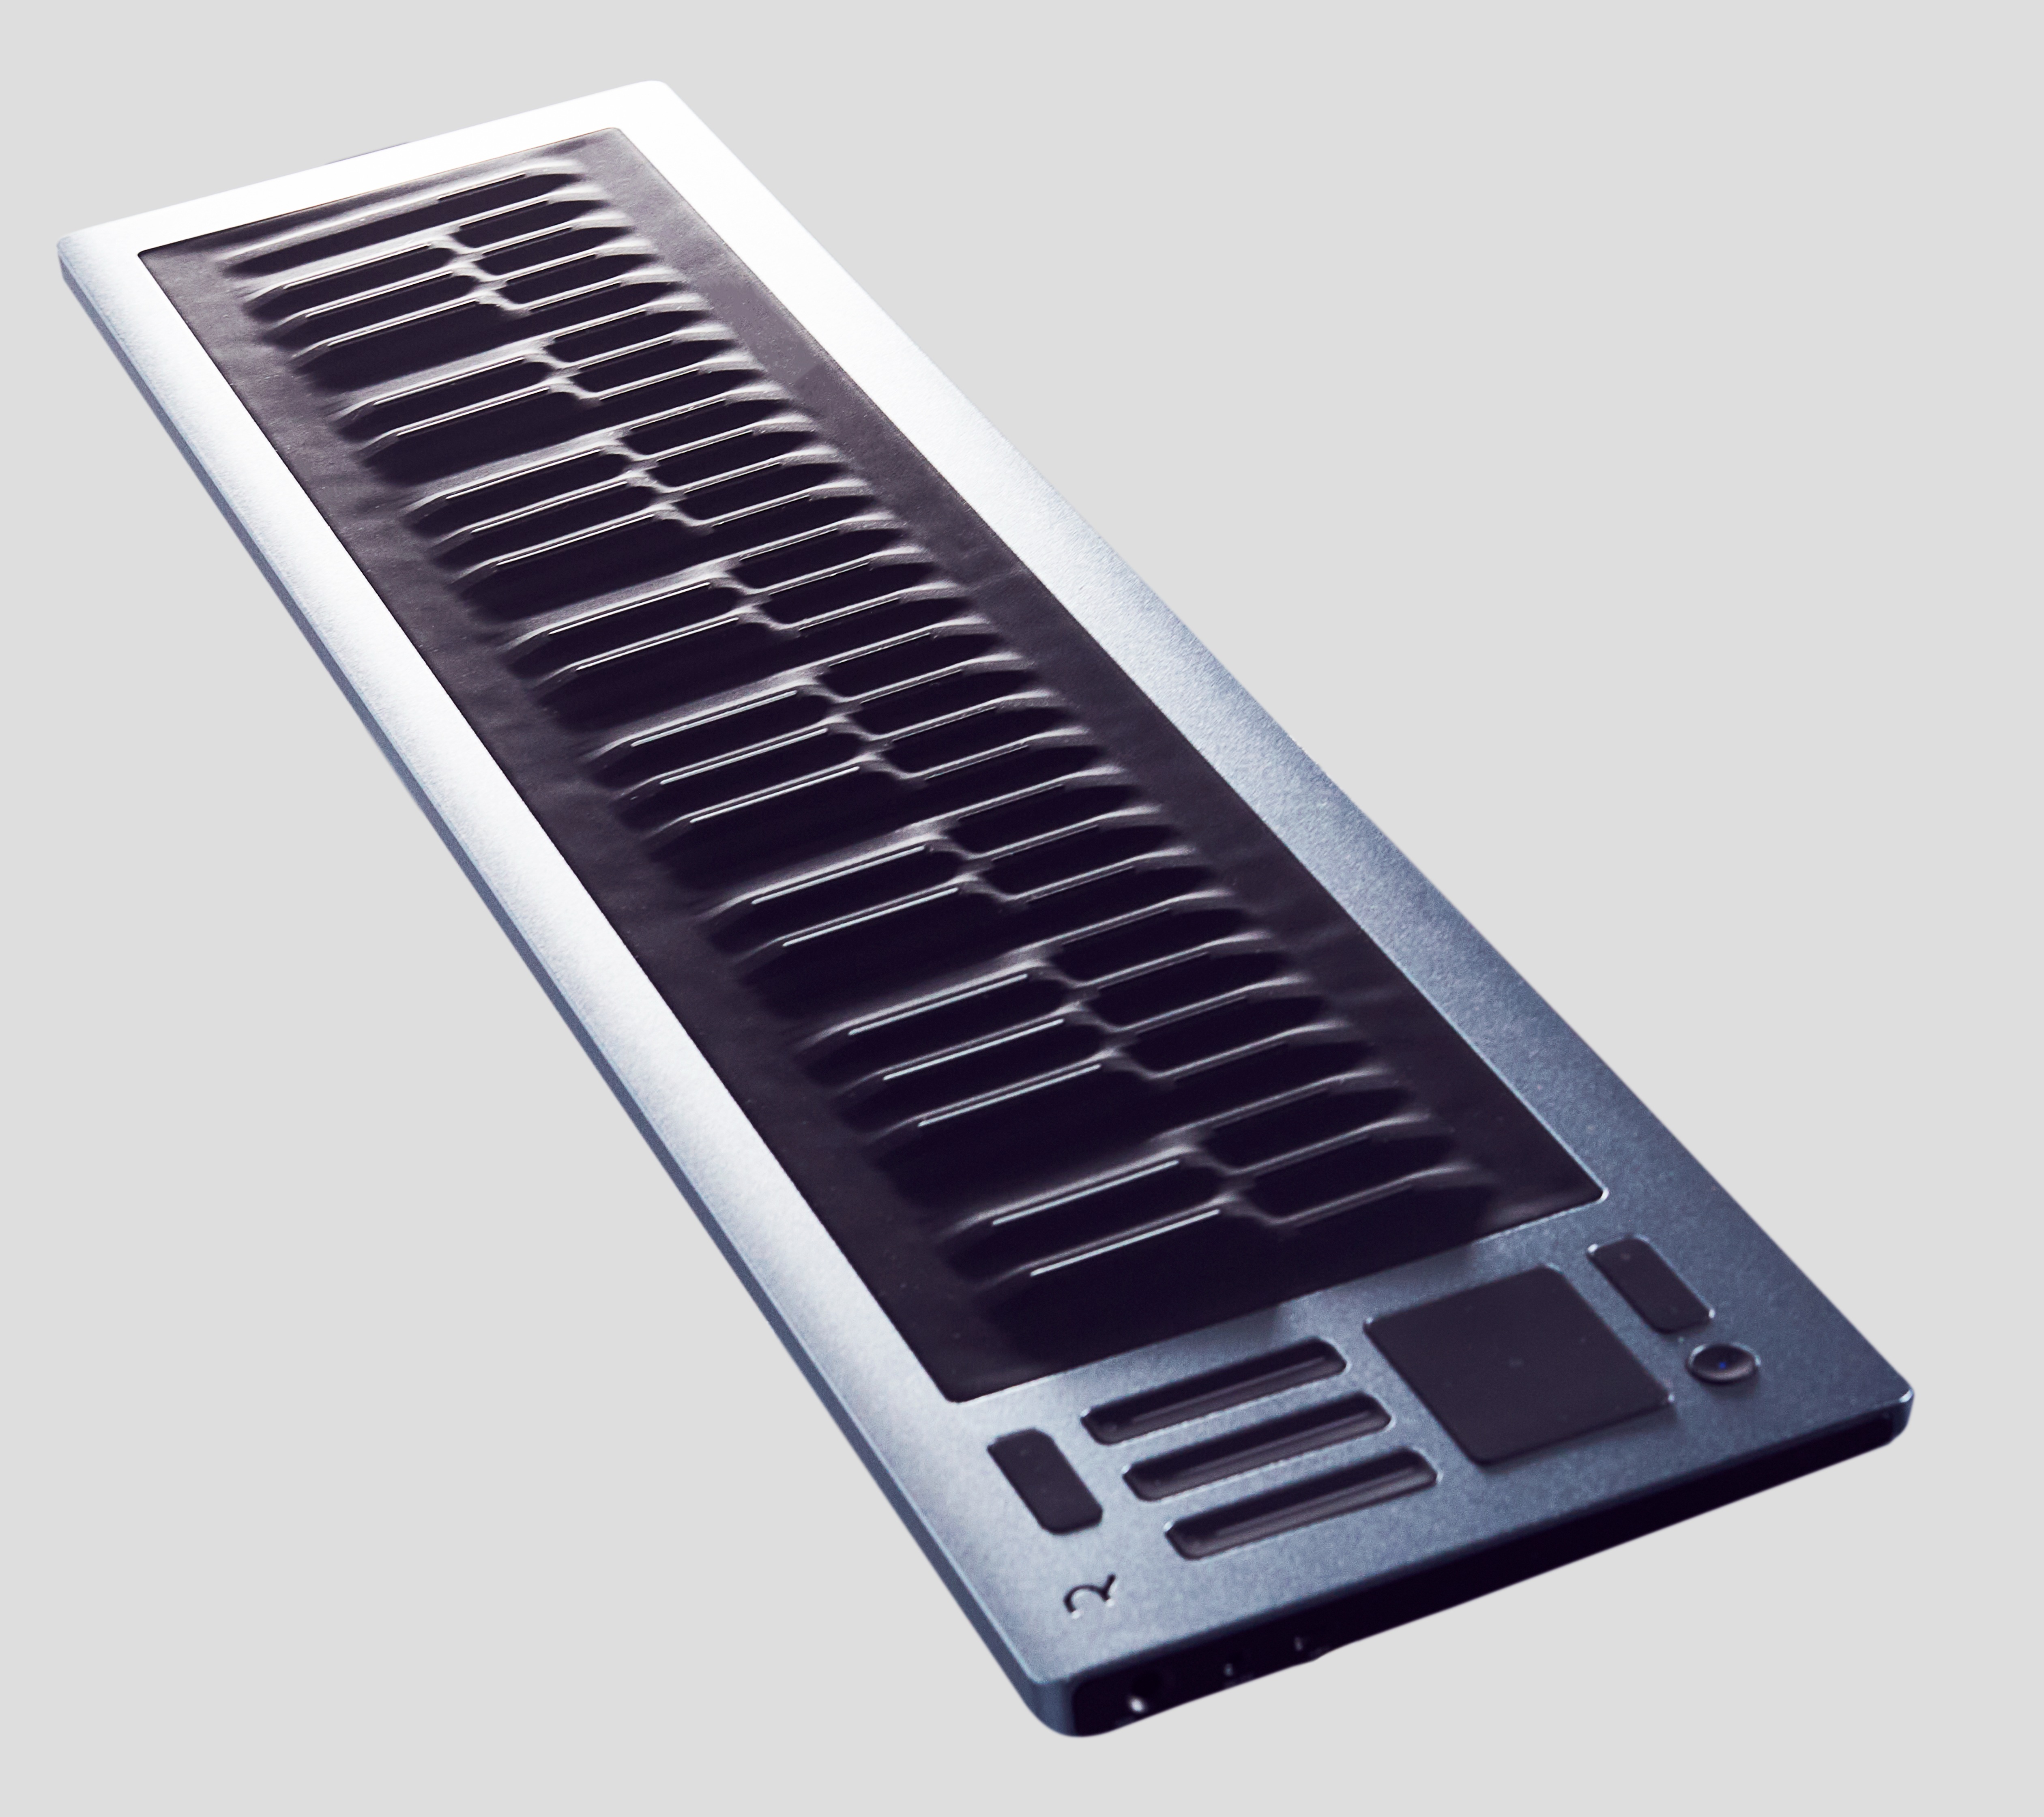 Meet Arturia MiniLab 3, “the world's first eco-designed MIDI keyboard”